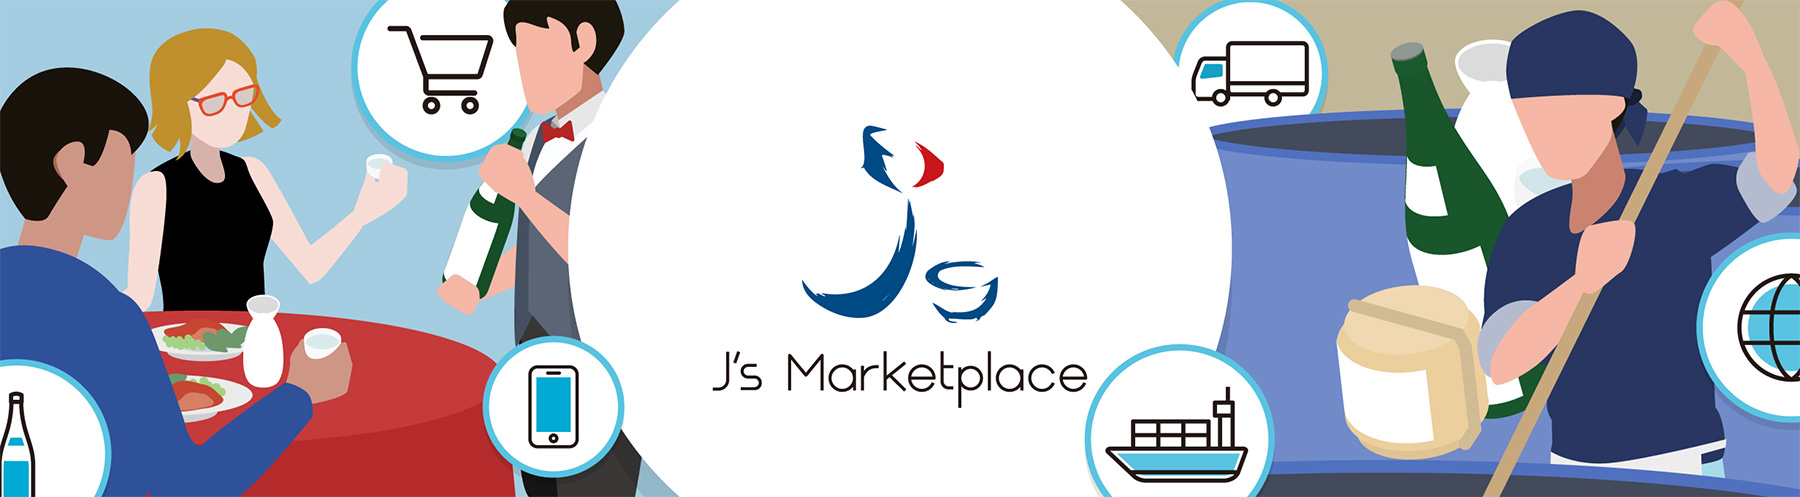 J's Marketplace DX Solution for Japanese Sake Export